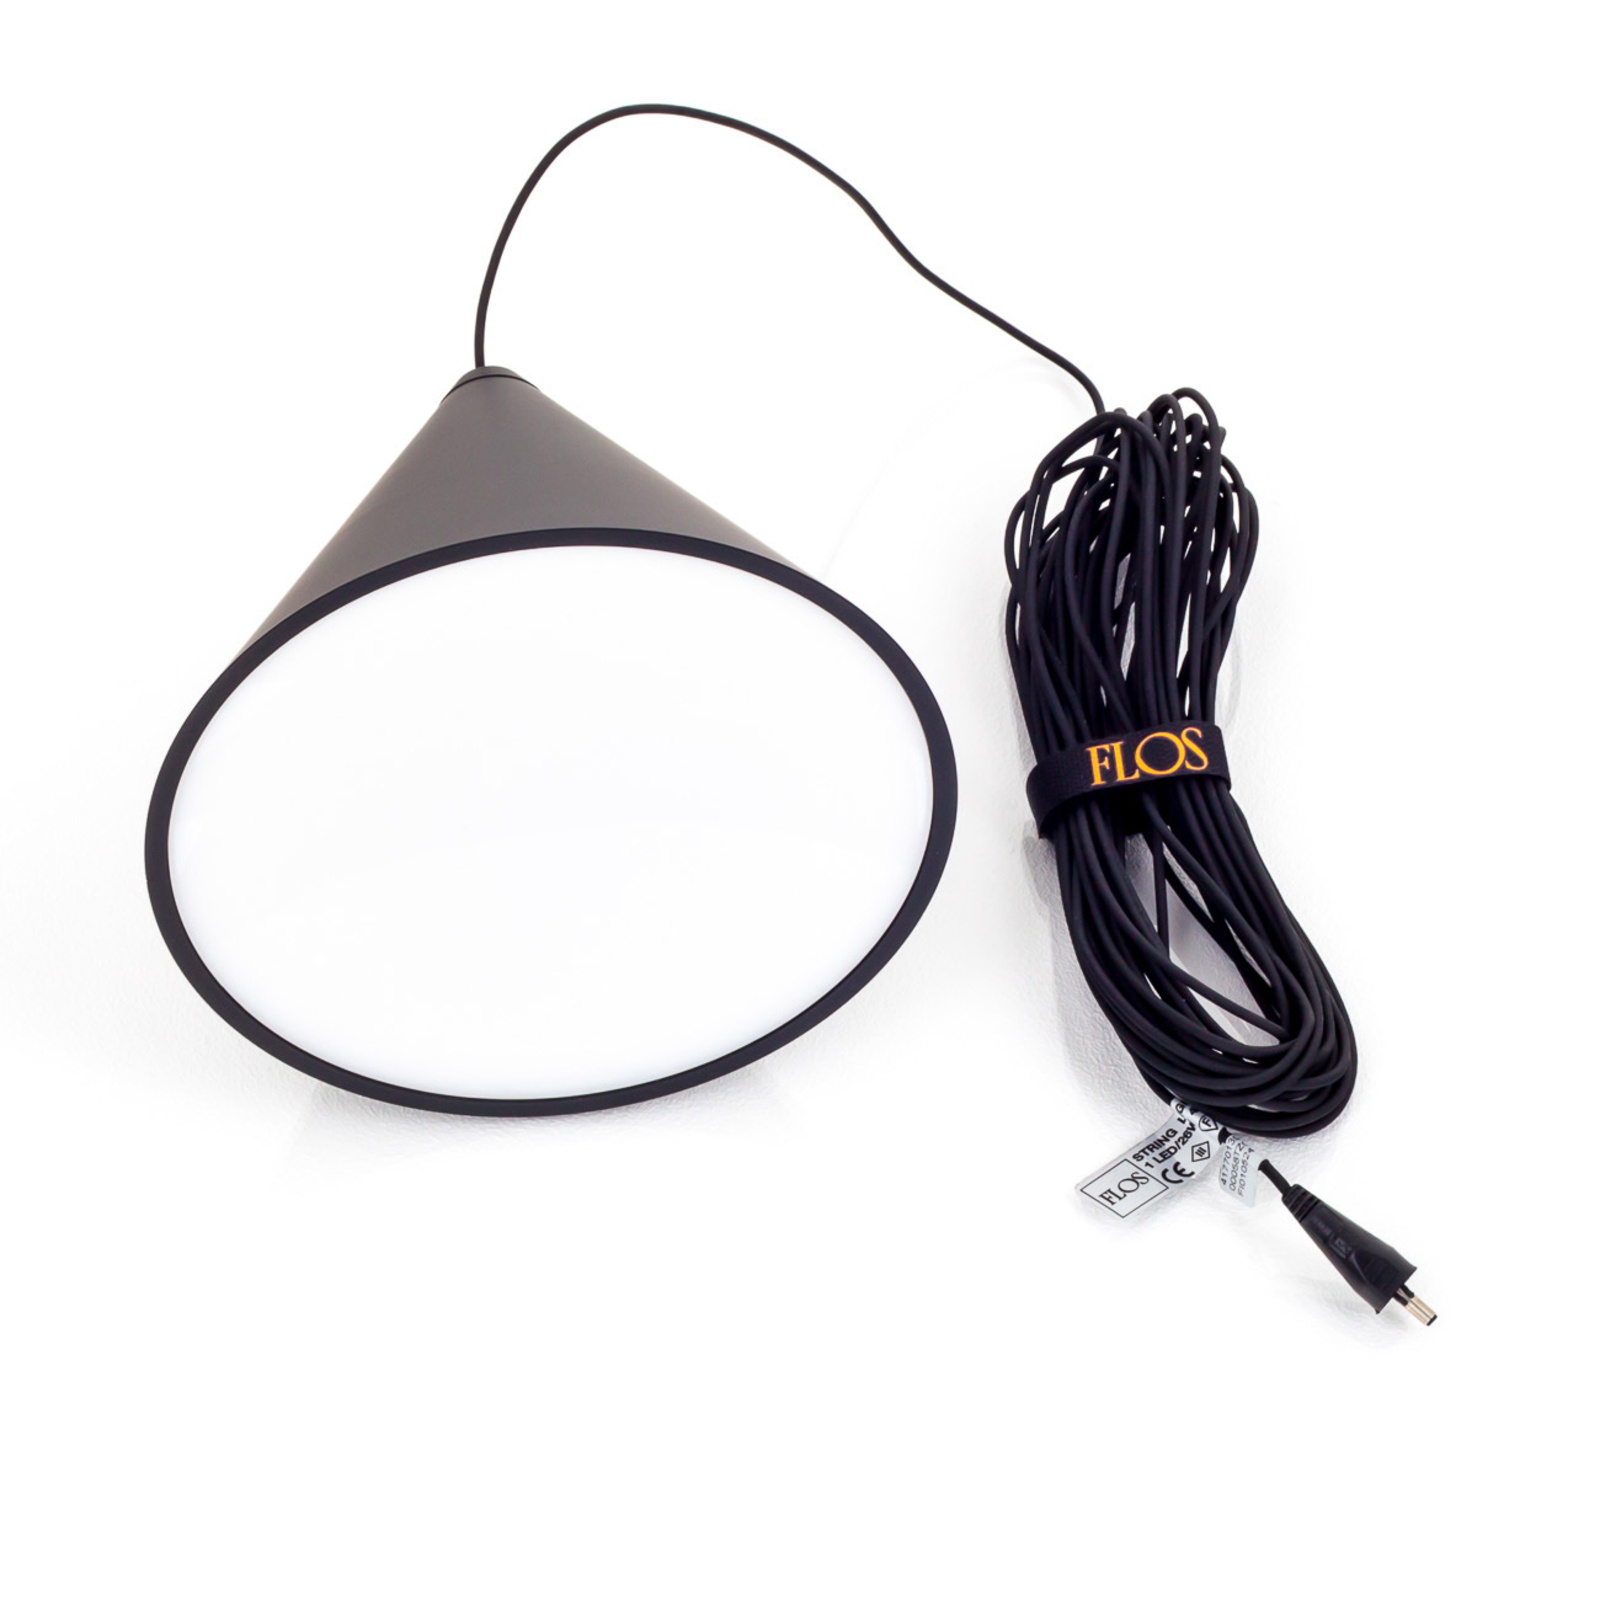 FLOS String light obesek, 12 m kabla, stožec